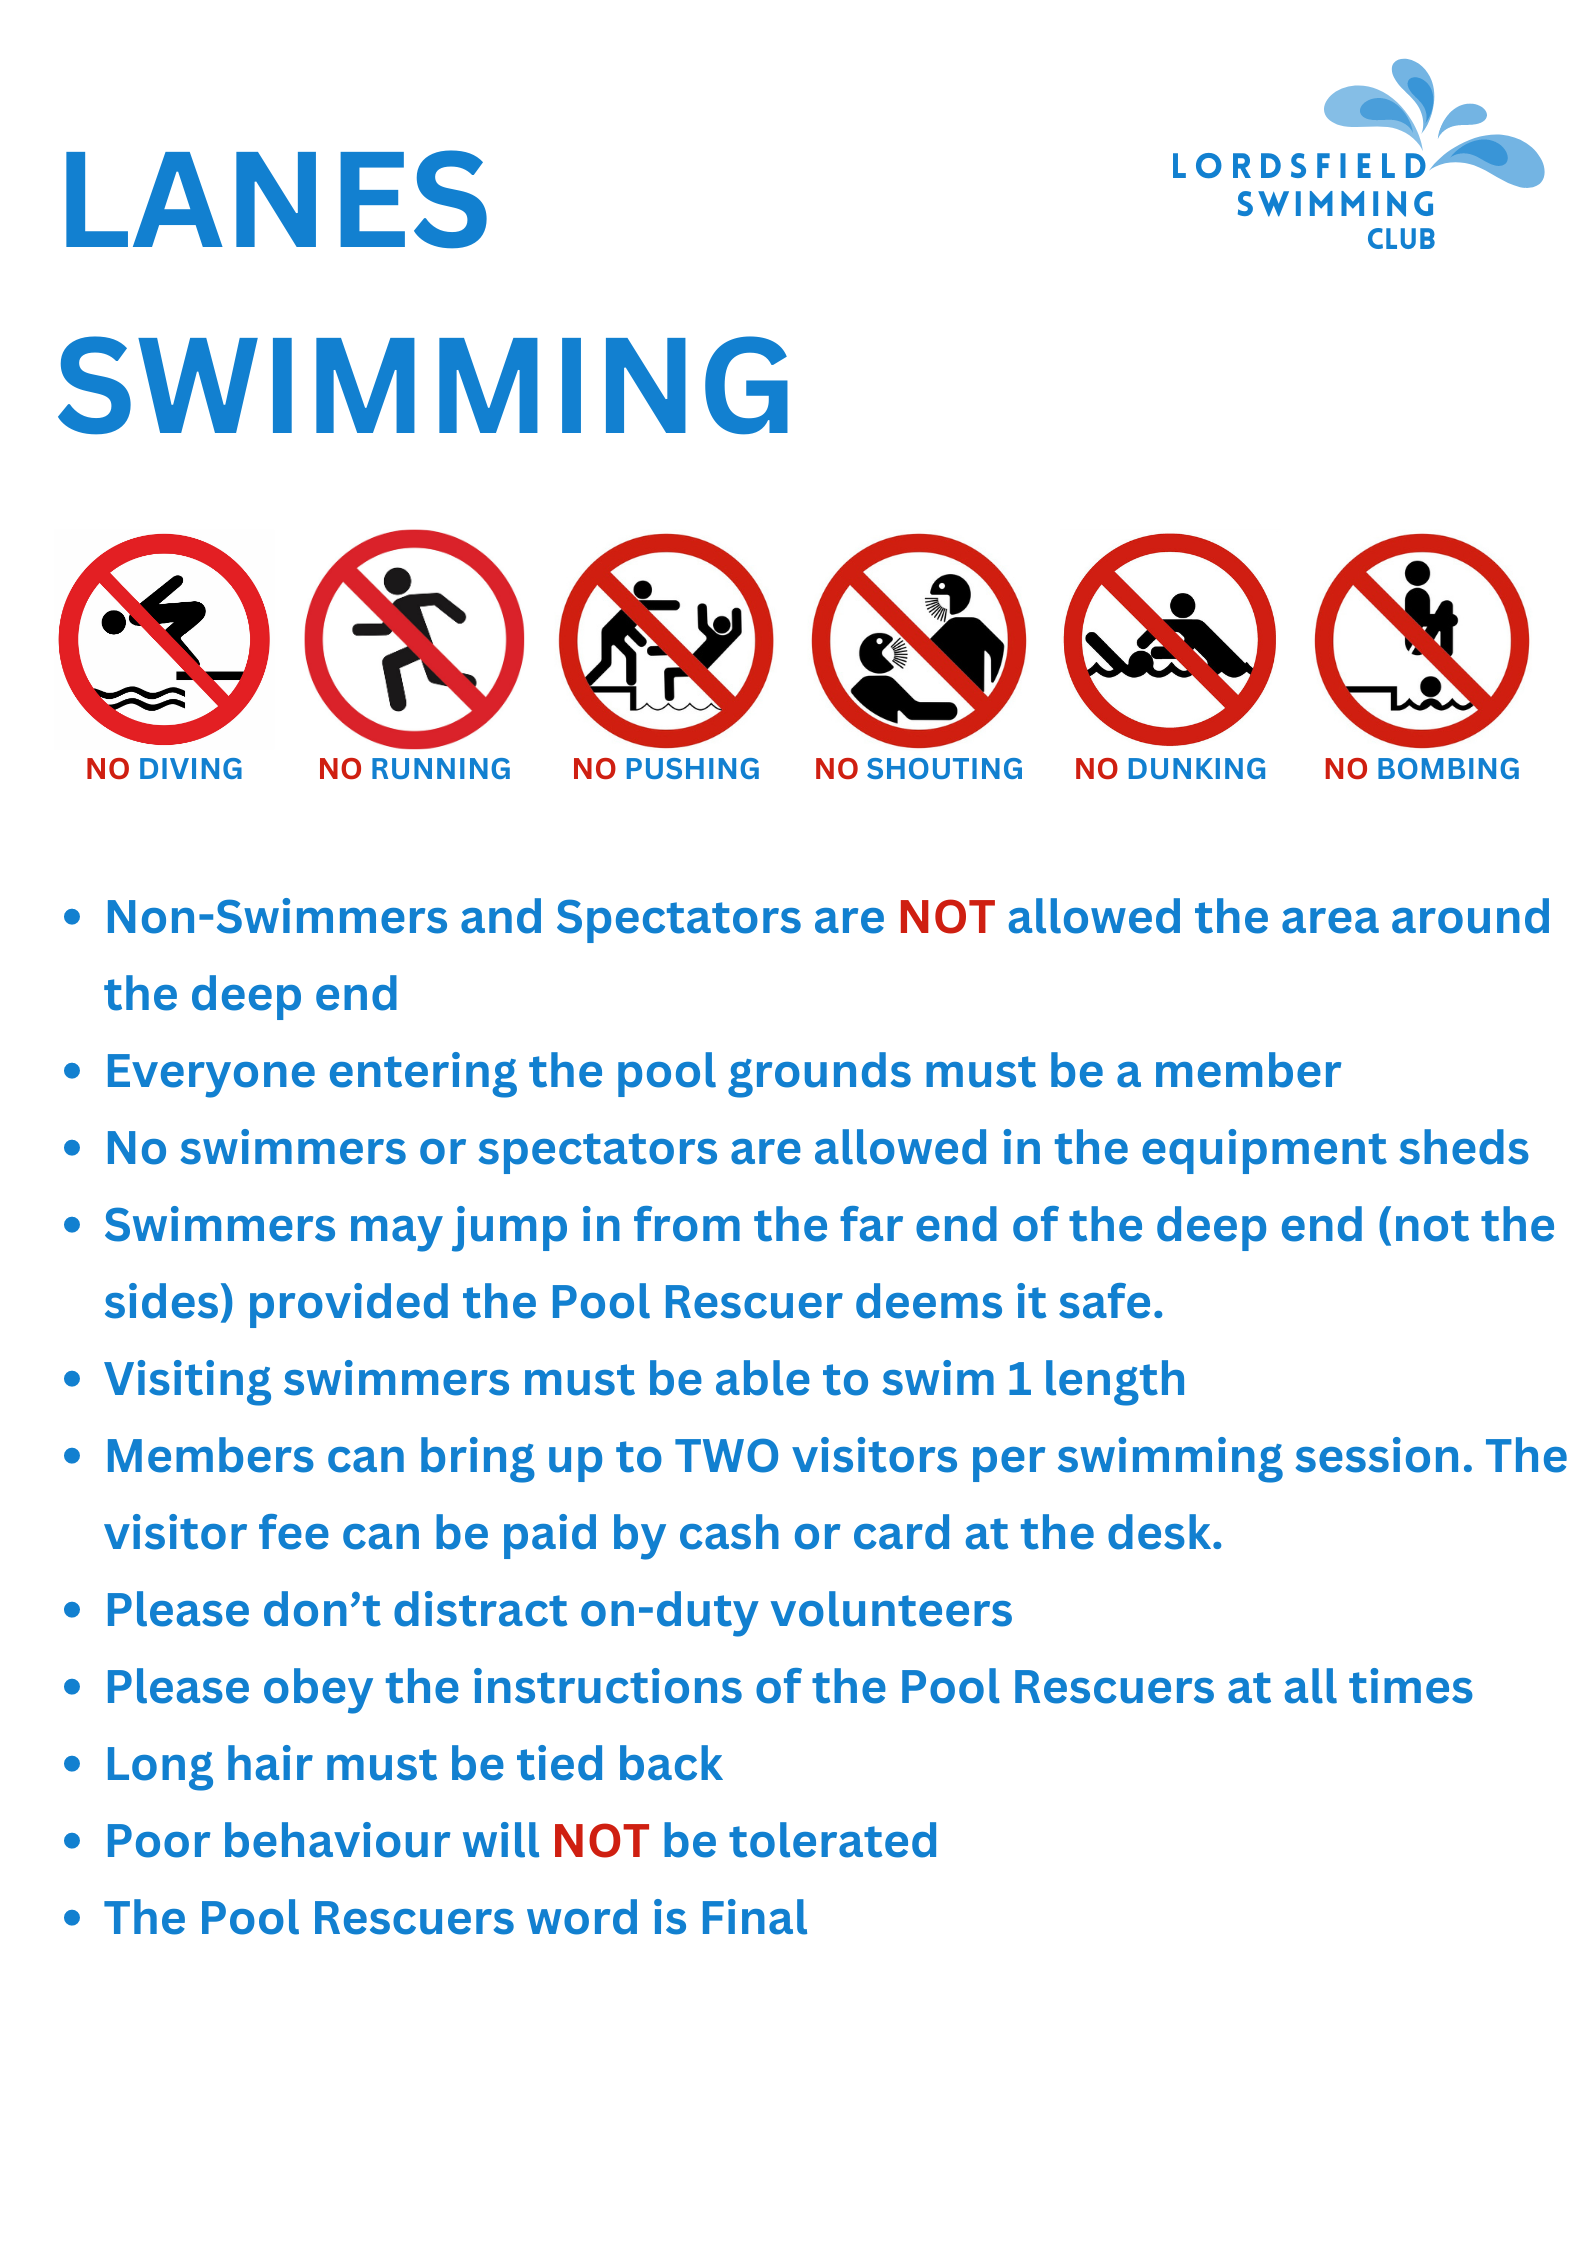 Lordsfield Swimming Club Lanes Swimming Rules